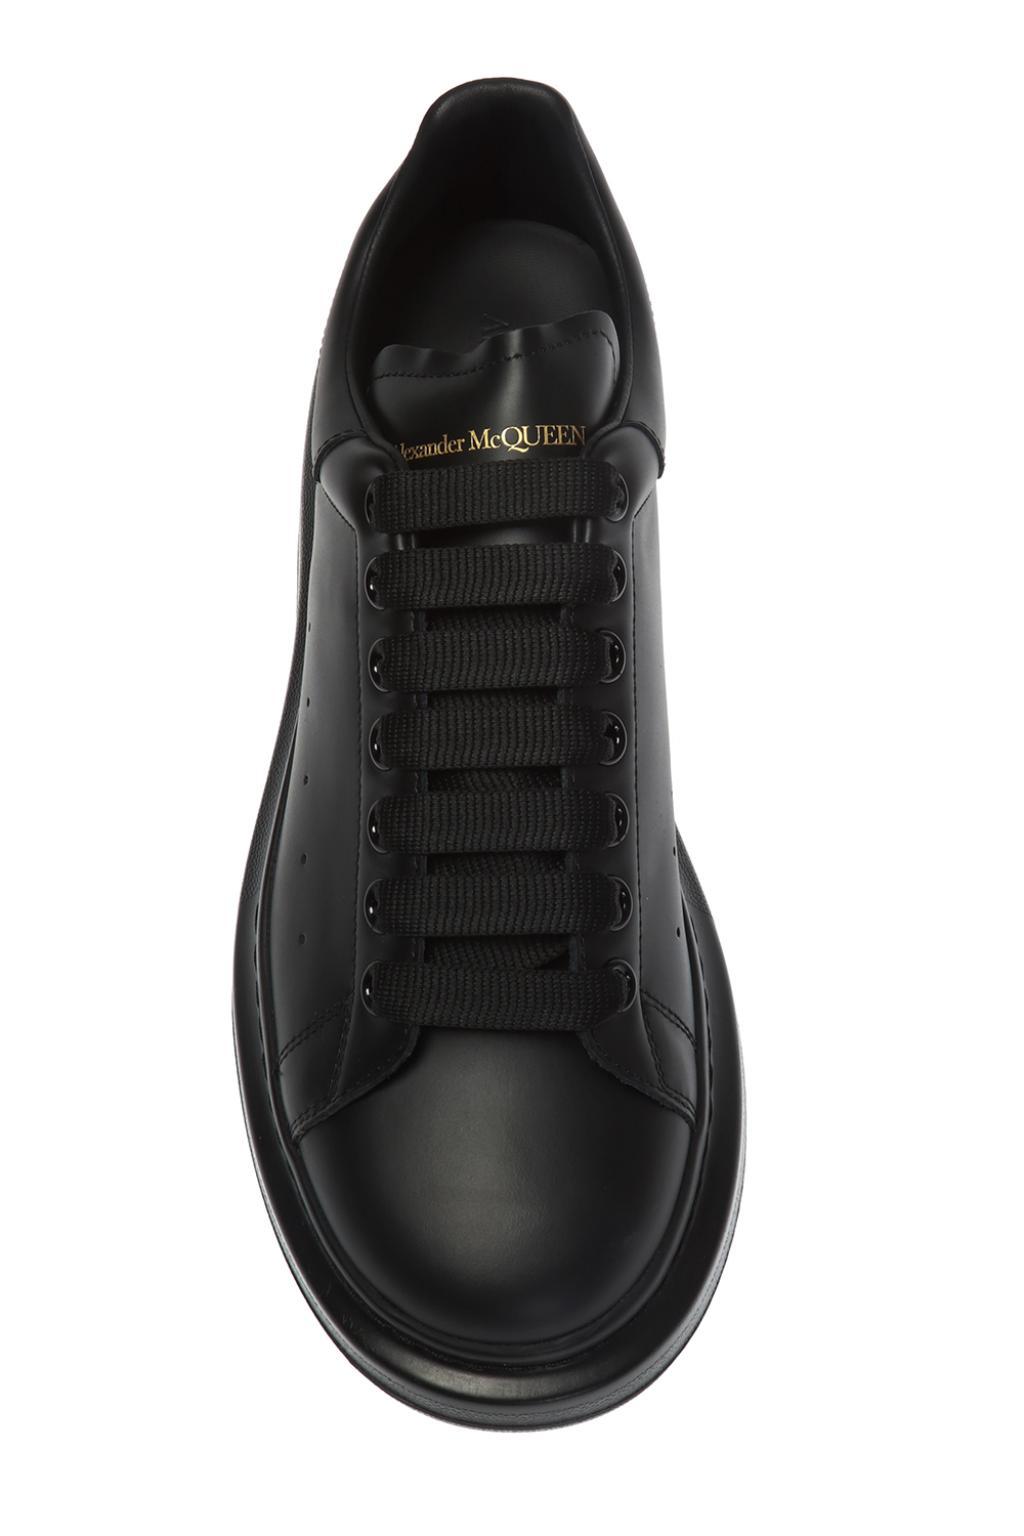 Alexander McQueen Leather Logo Sneakers in Black for Men - Lyst